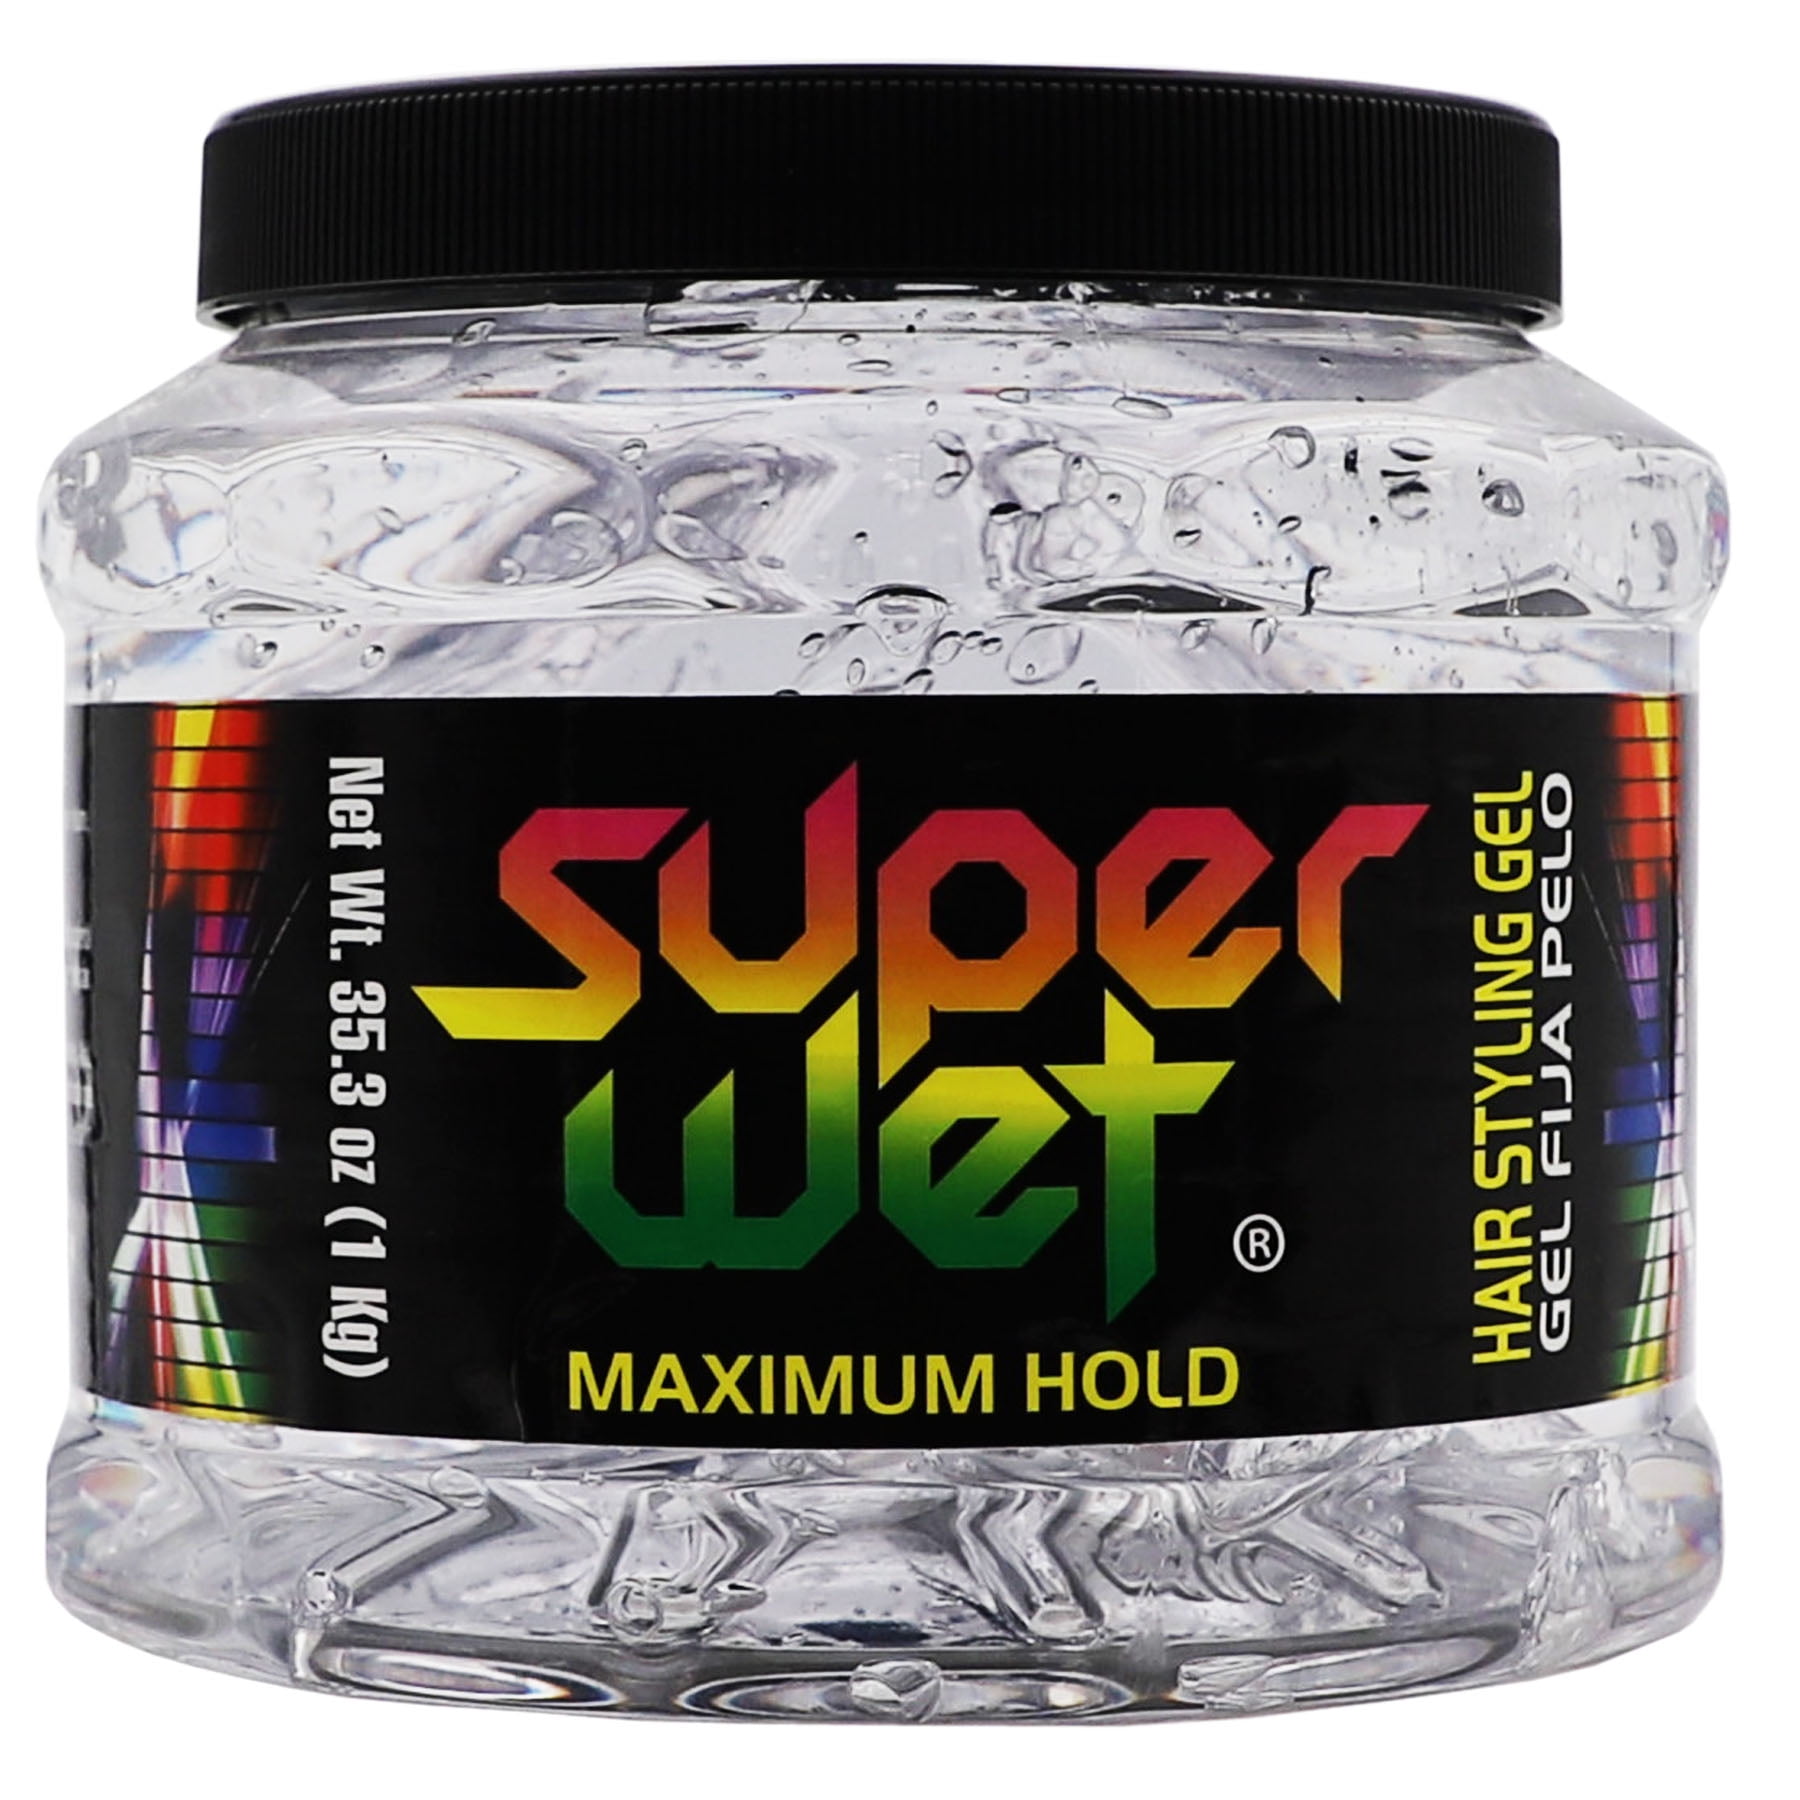 Super Wet Plus Transparente Moisturizing Jar Hair Styling Gel Oz Walmart